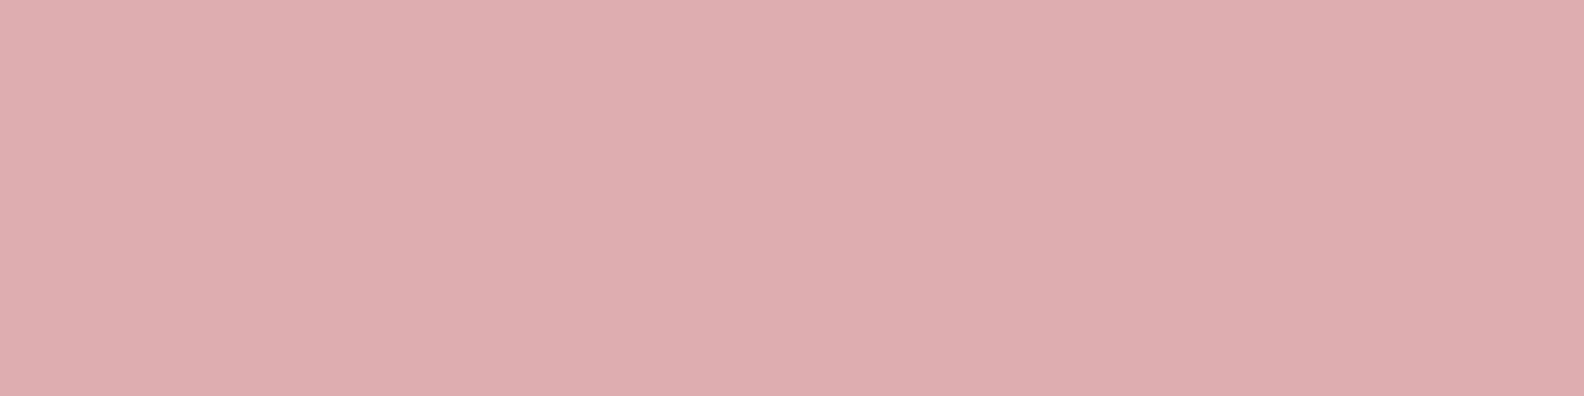 1584x396 Pale Chestnut Solid Color Background